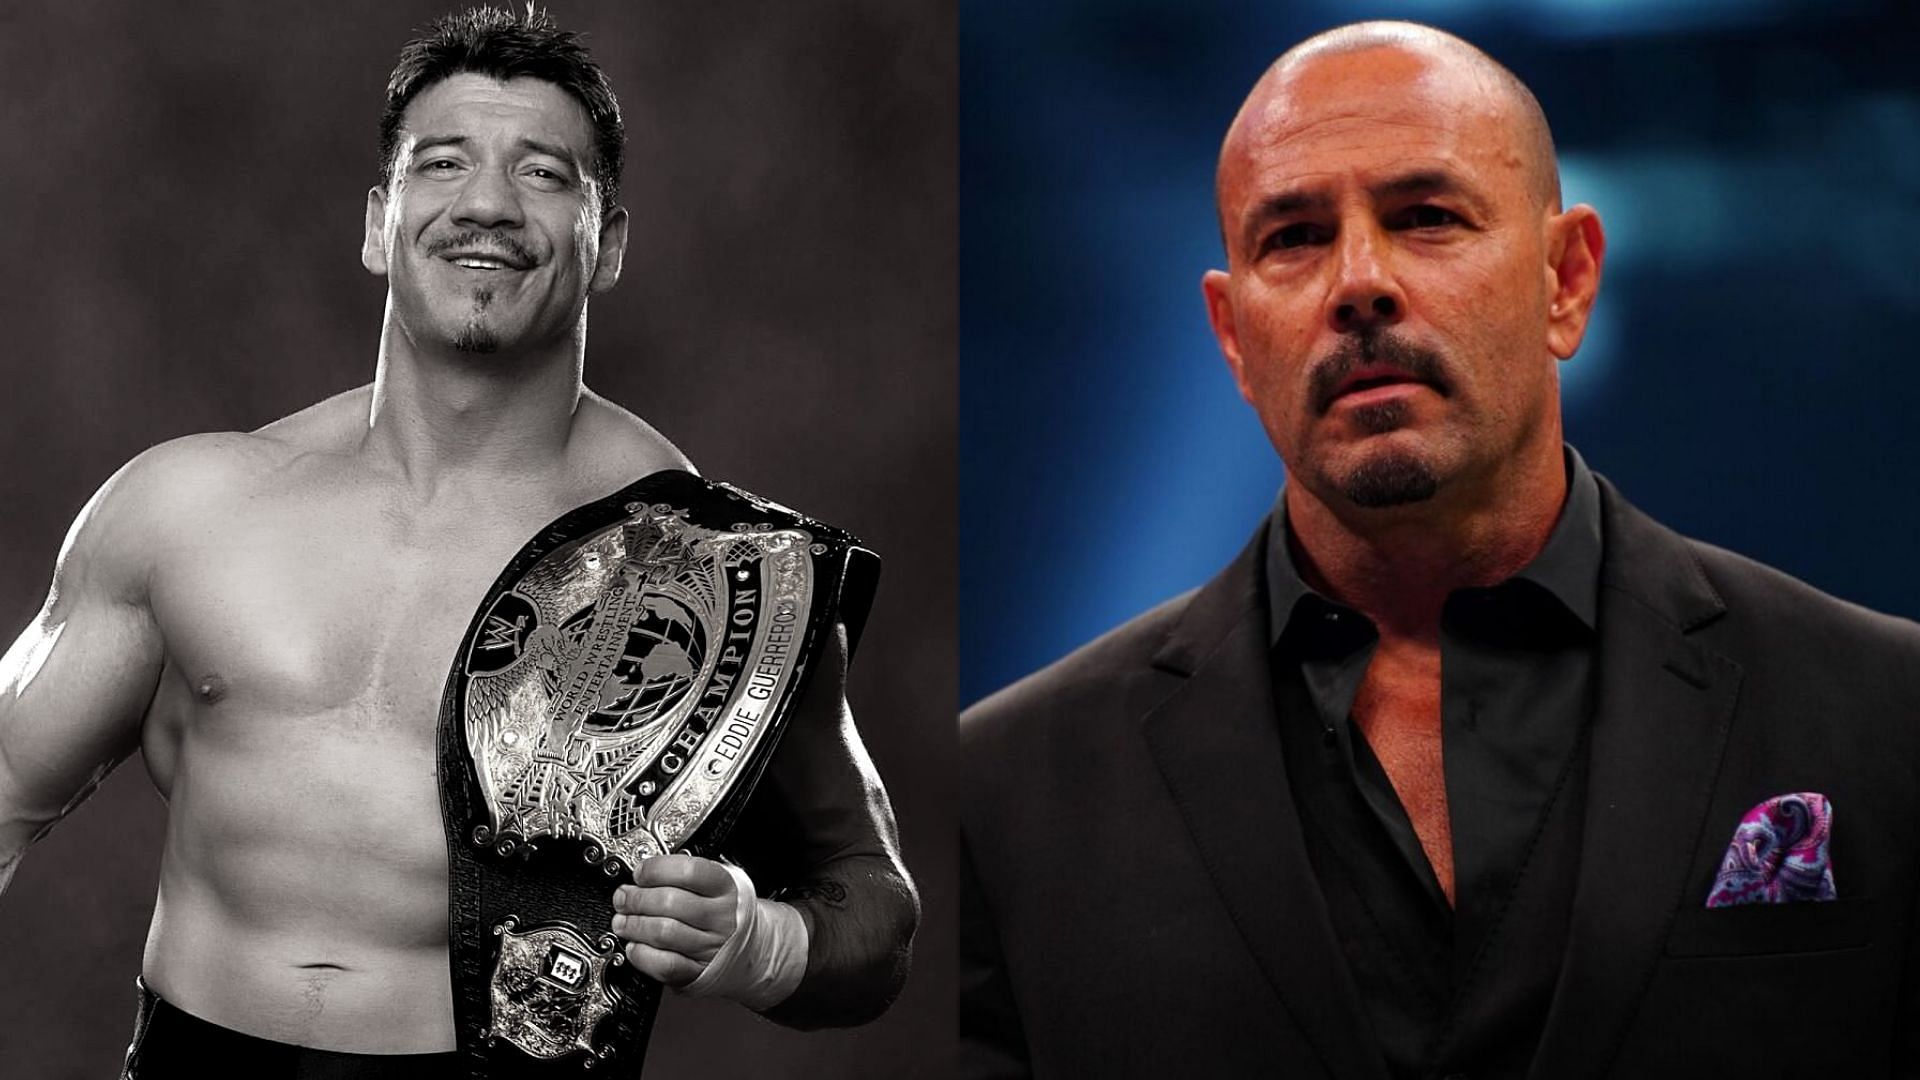 Has WWE respected the legacy of Eddie Guerrero?